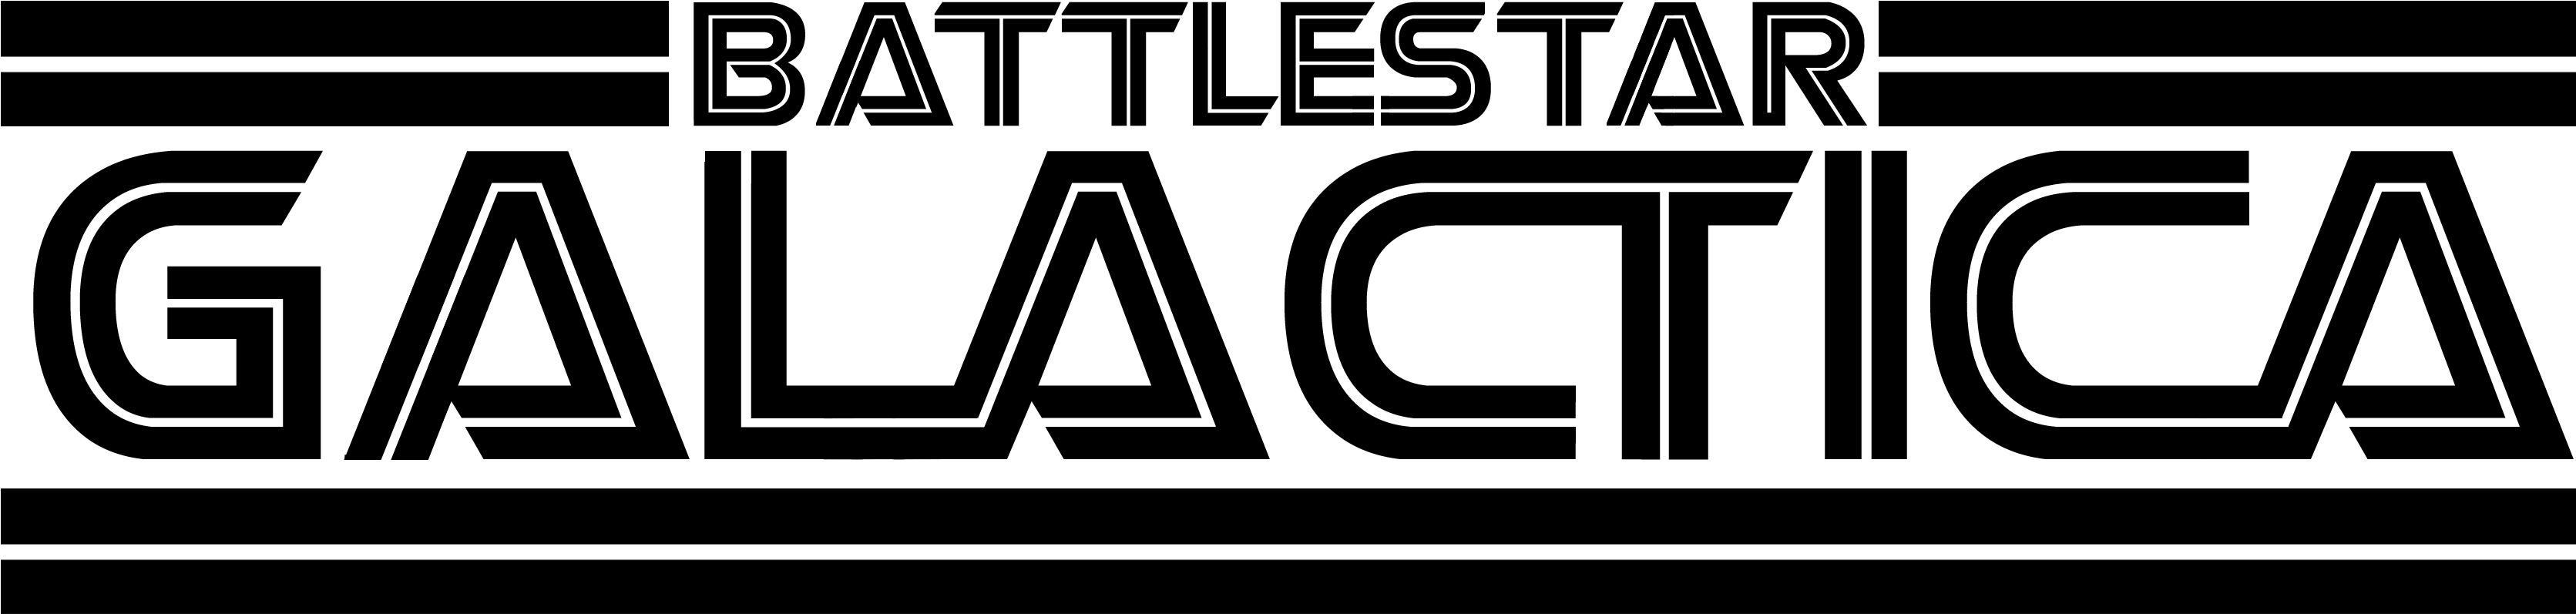 File Battlestar Galactia Logo Black Png Wikimedia Commons - Battlestar Galactica Tv Show Logo (3342x841), Png Download